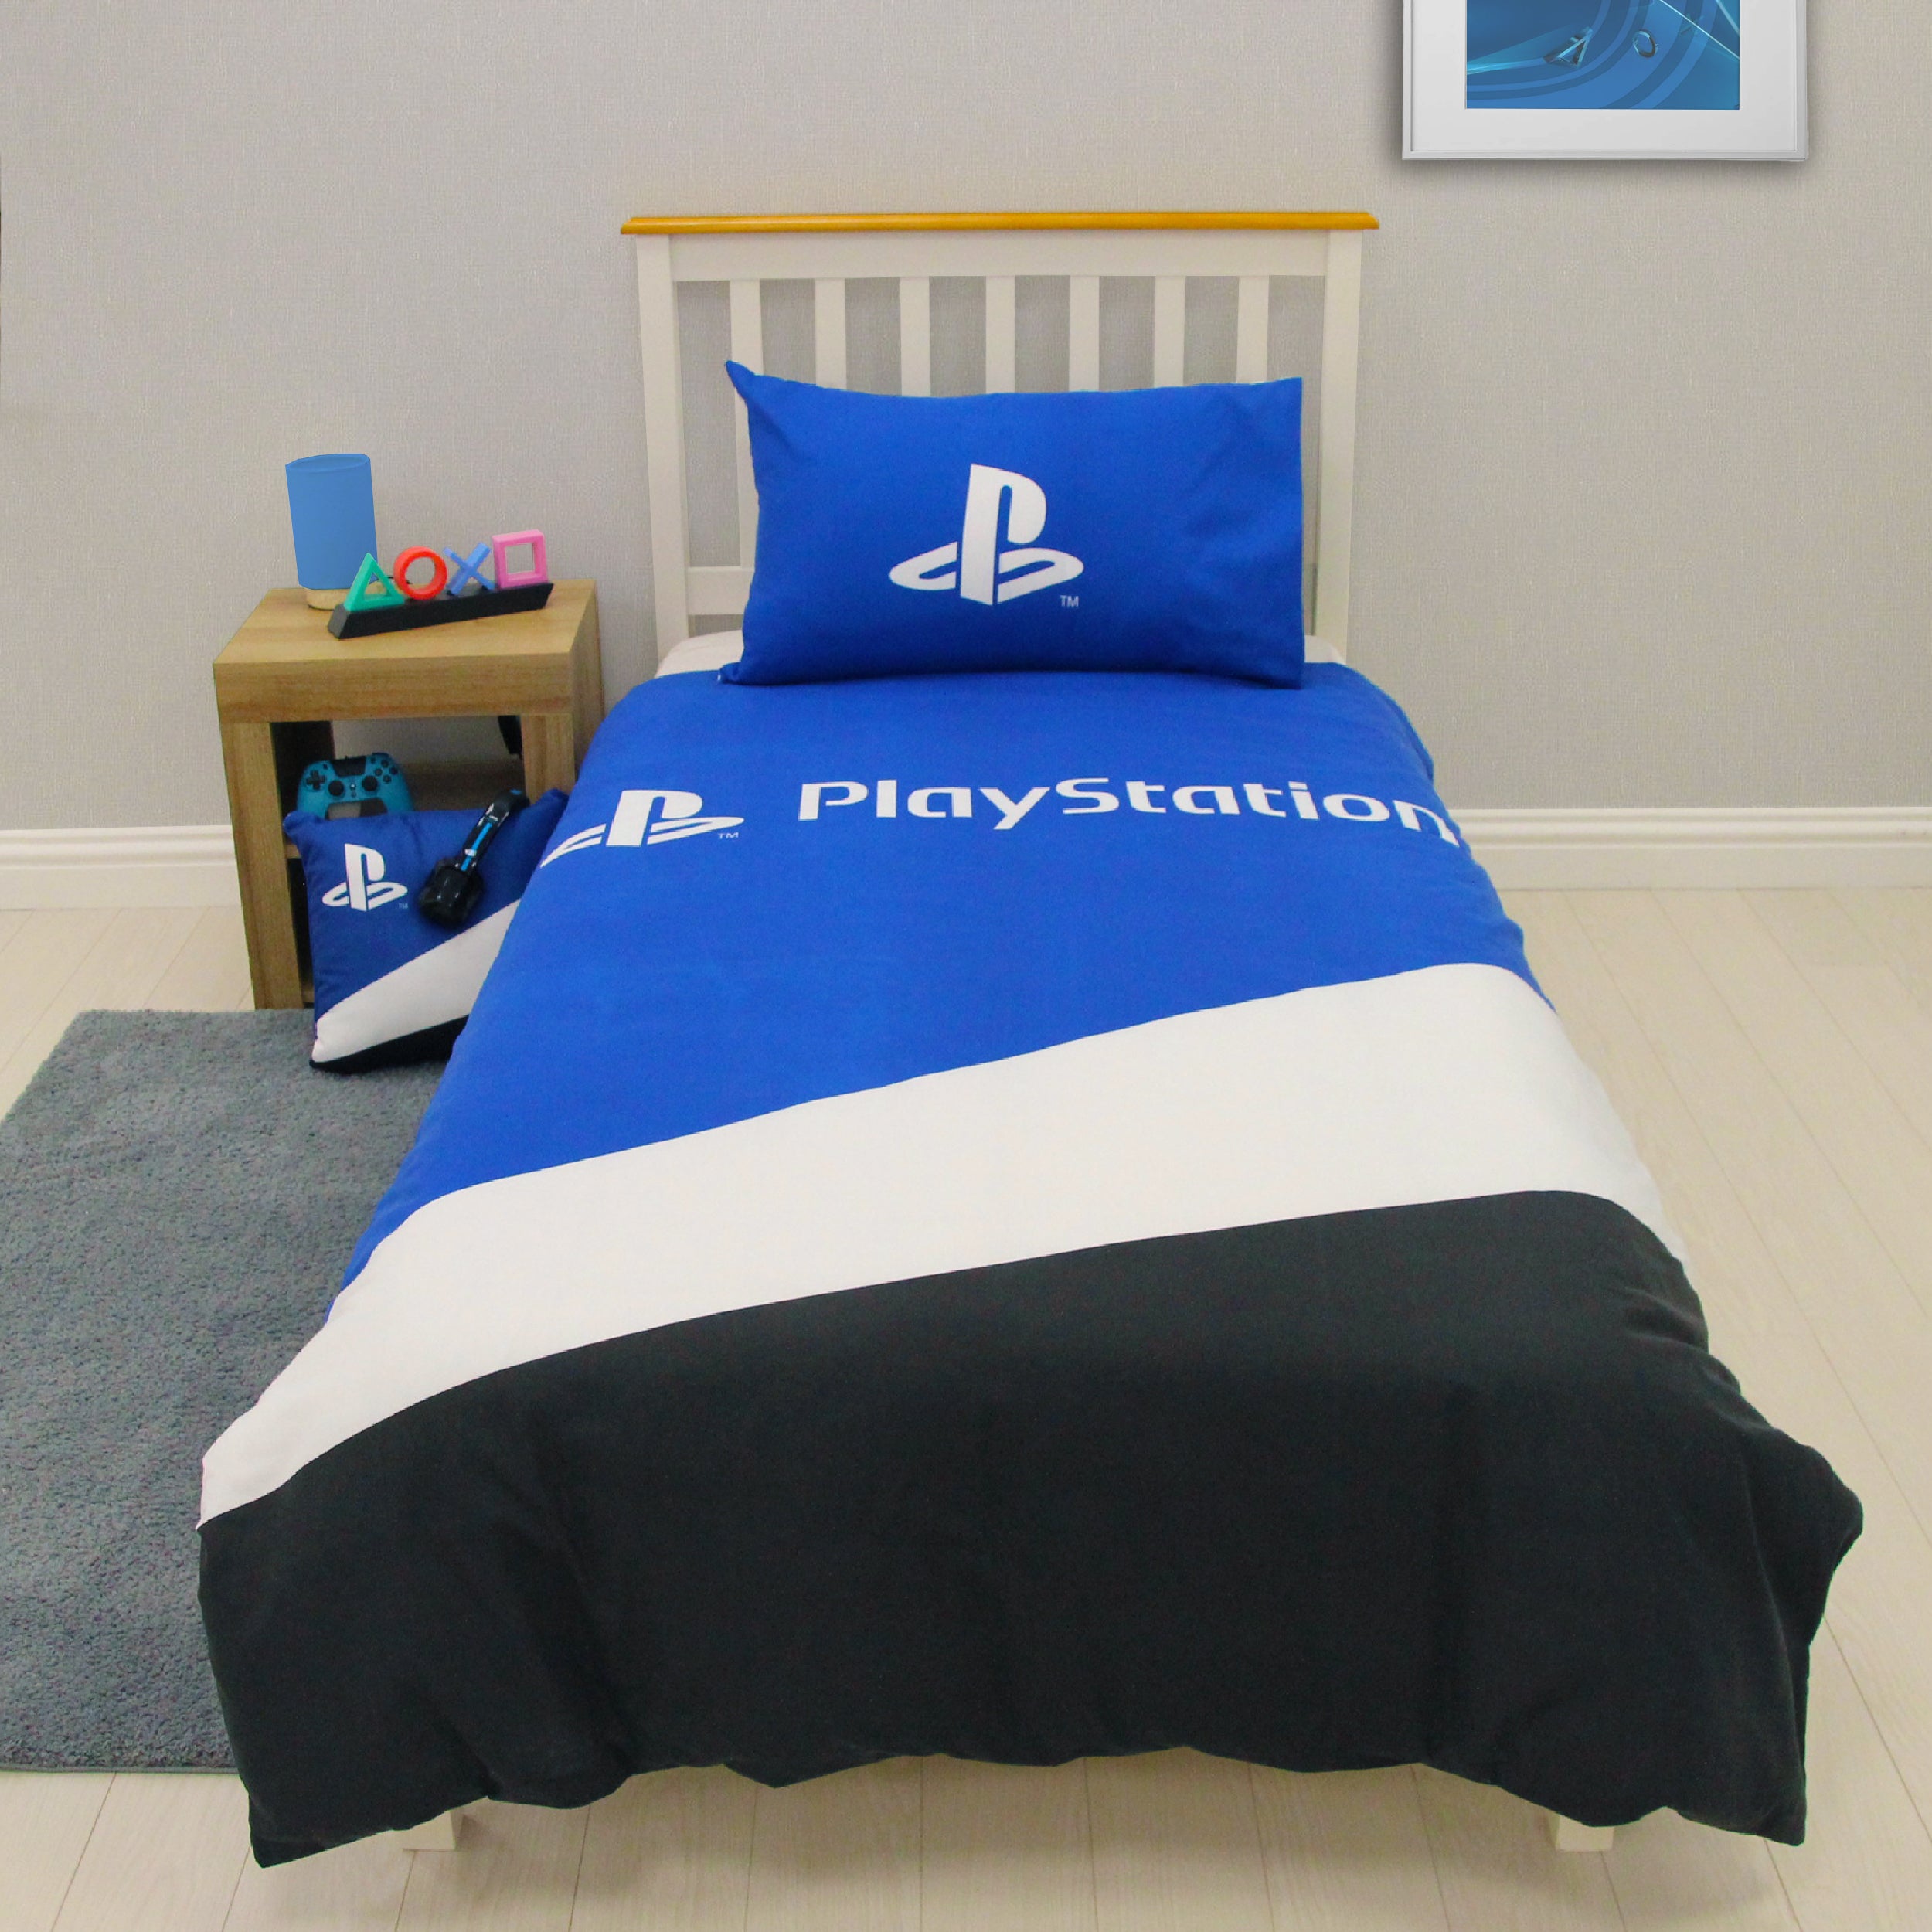 Playstation Duvet Cover Pillowcase Set Single Blue